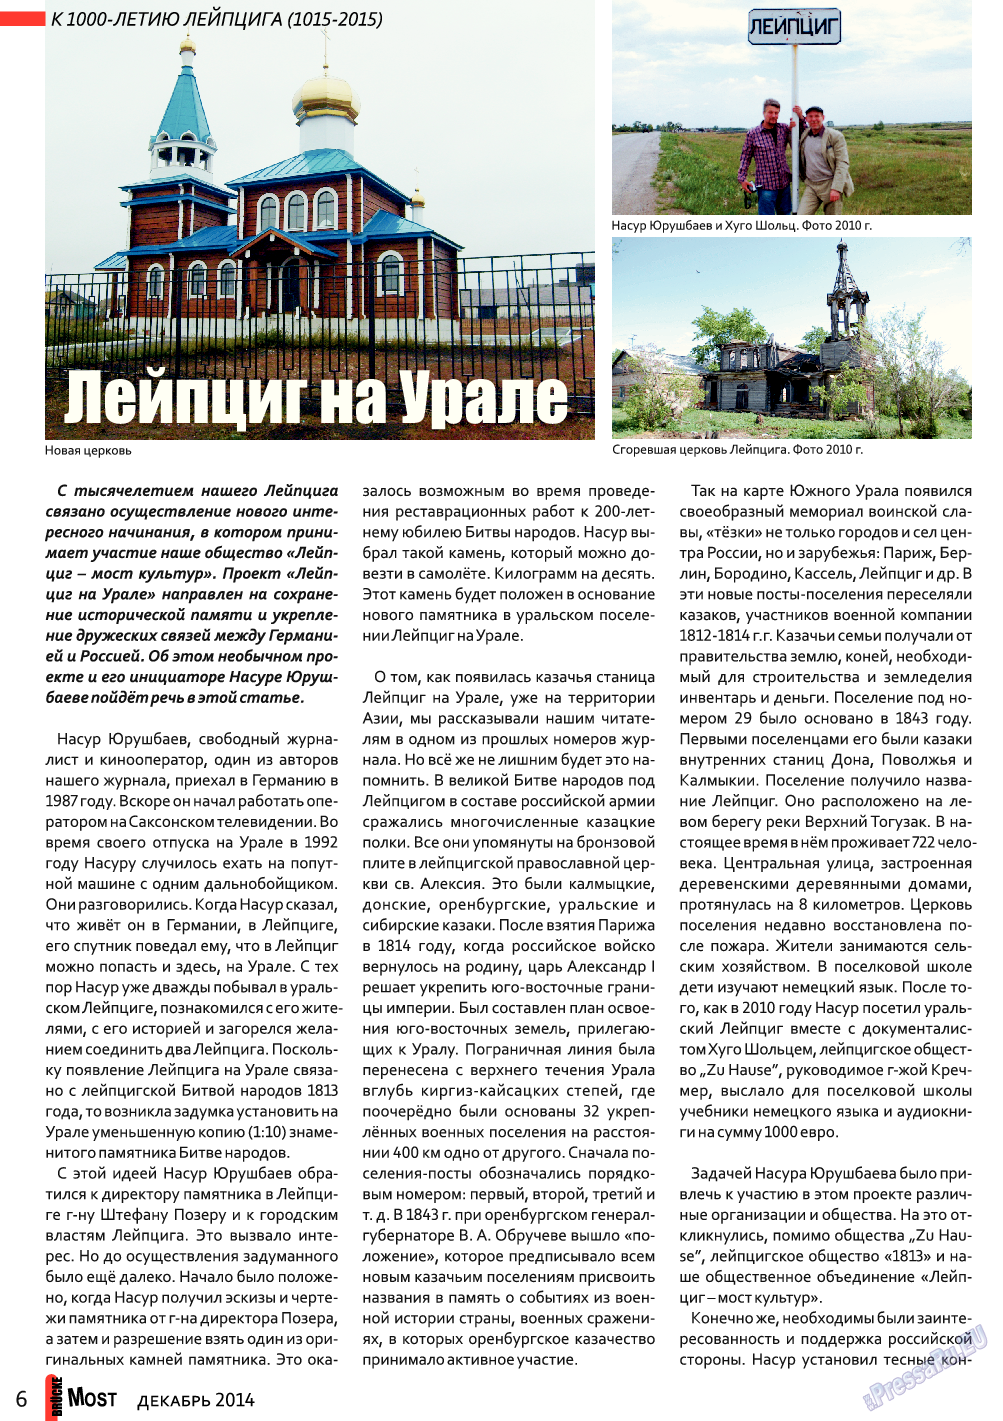 Мост, журнал. 2014 №12 стр.6